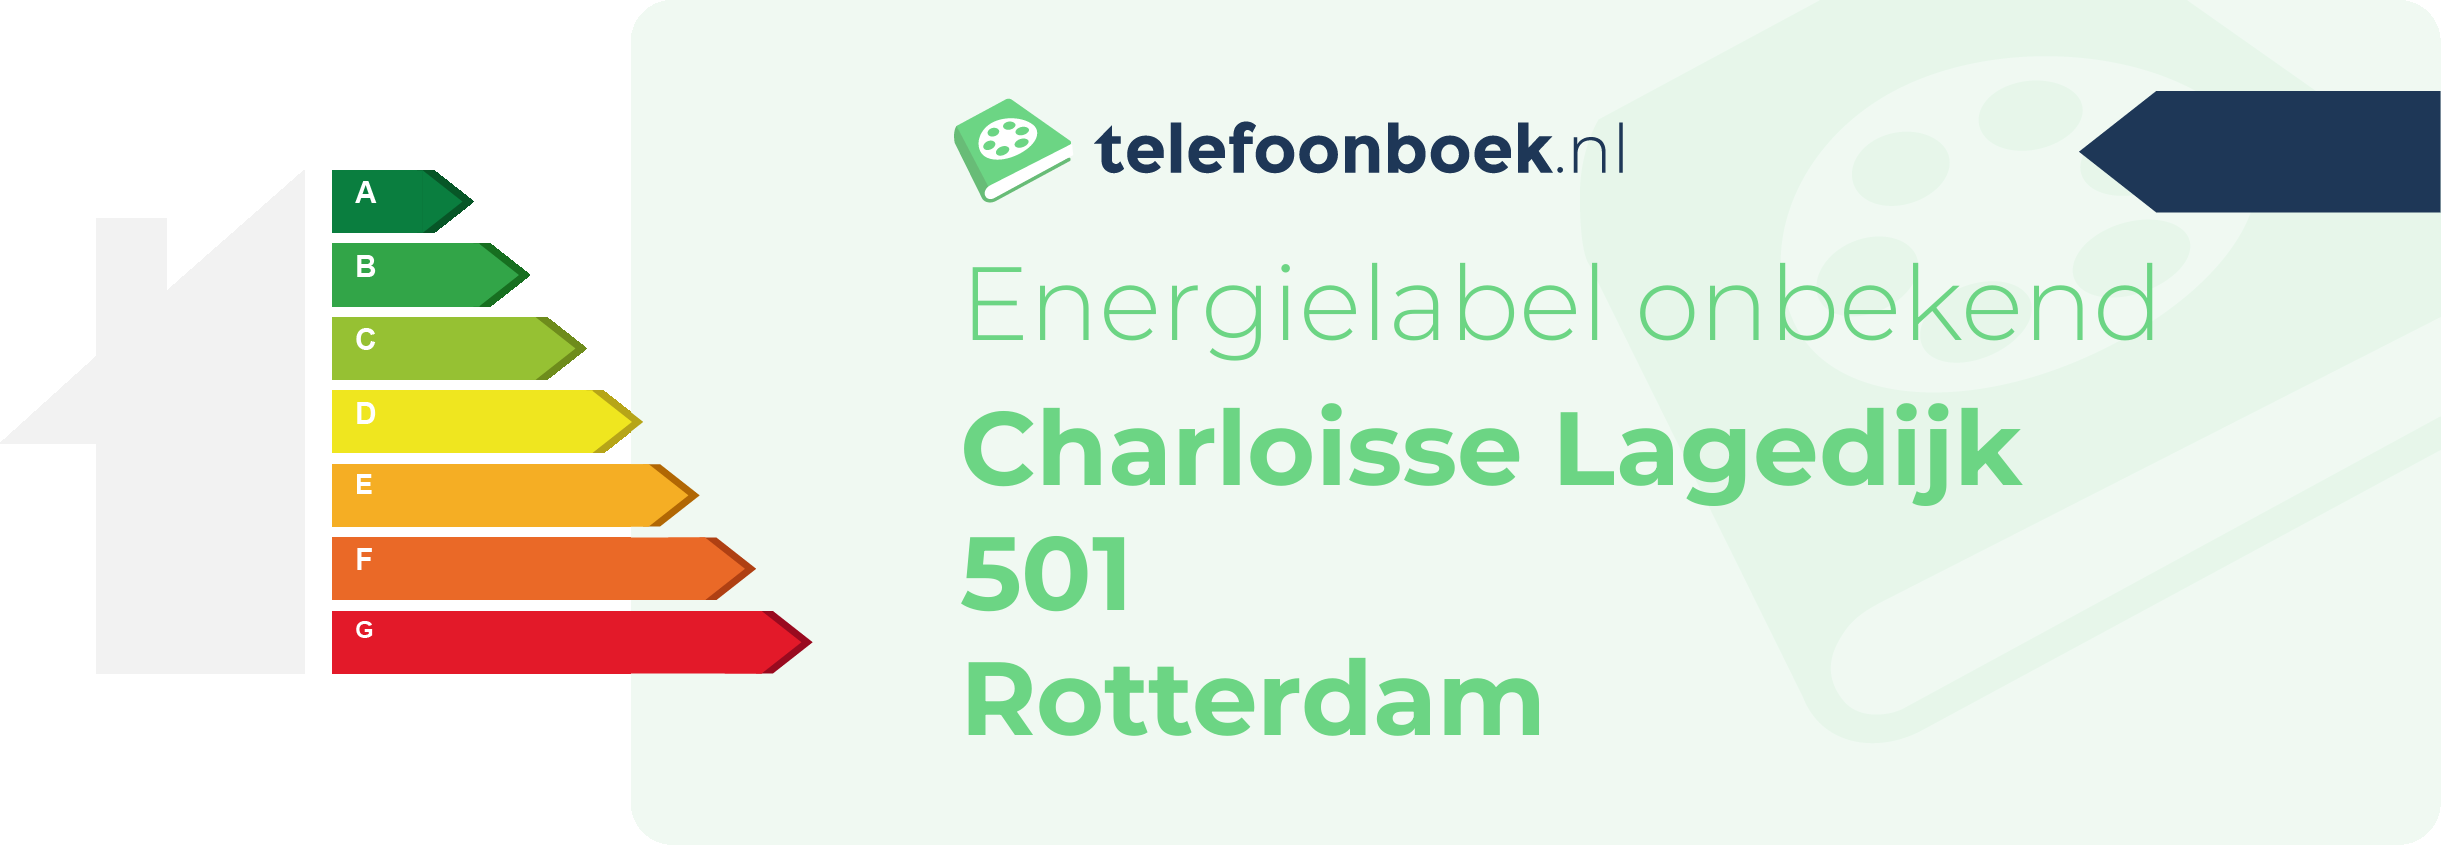 Energielabel Charloisse Lagedijk 501 Rotterdam